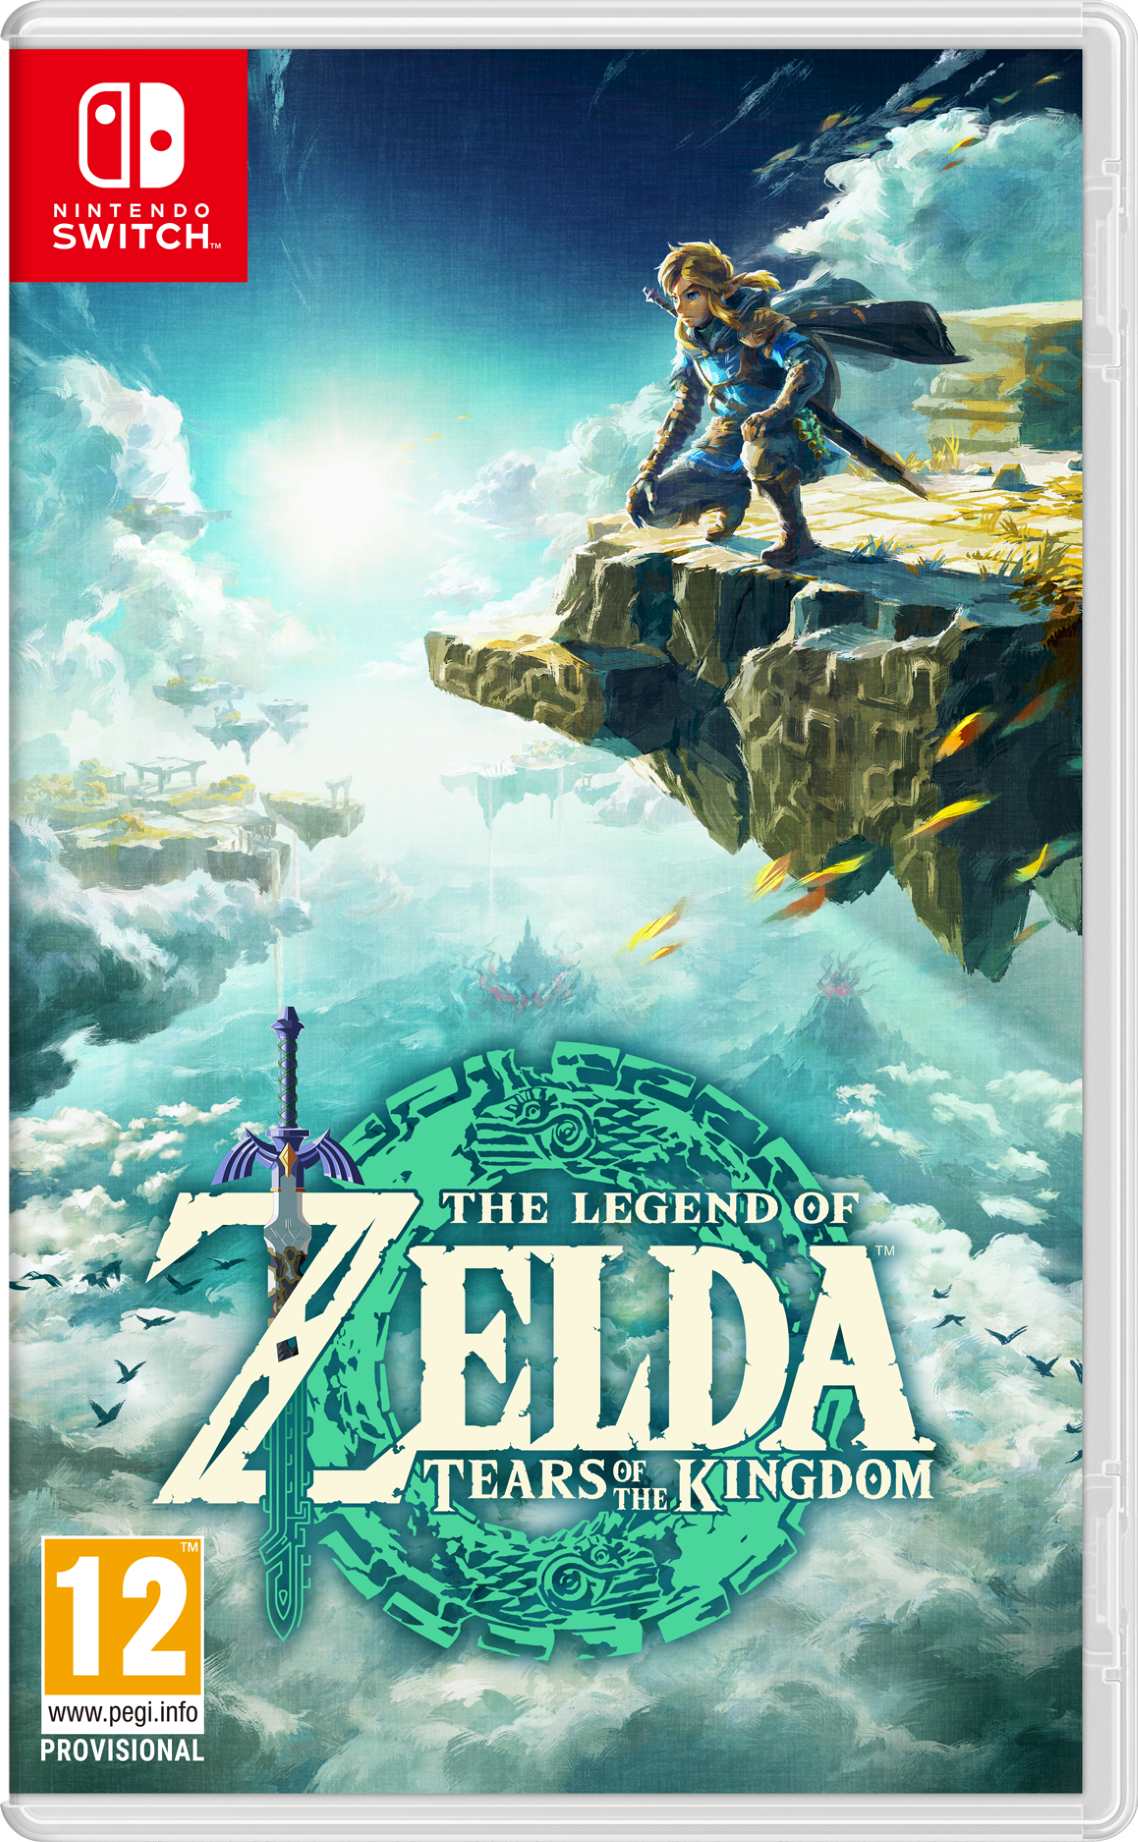 The Legend of Zelda Tears of the Kingdom with Pre-Order Bonus (NS)